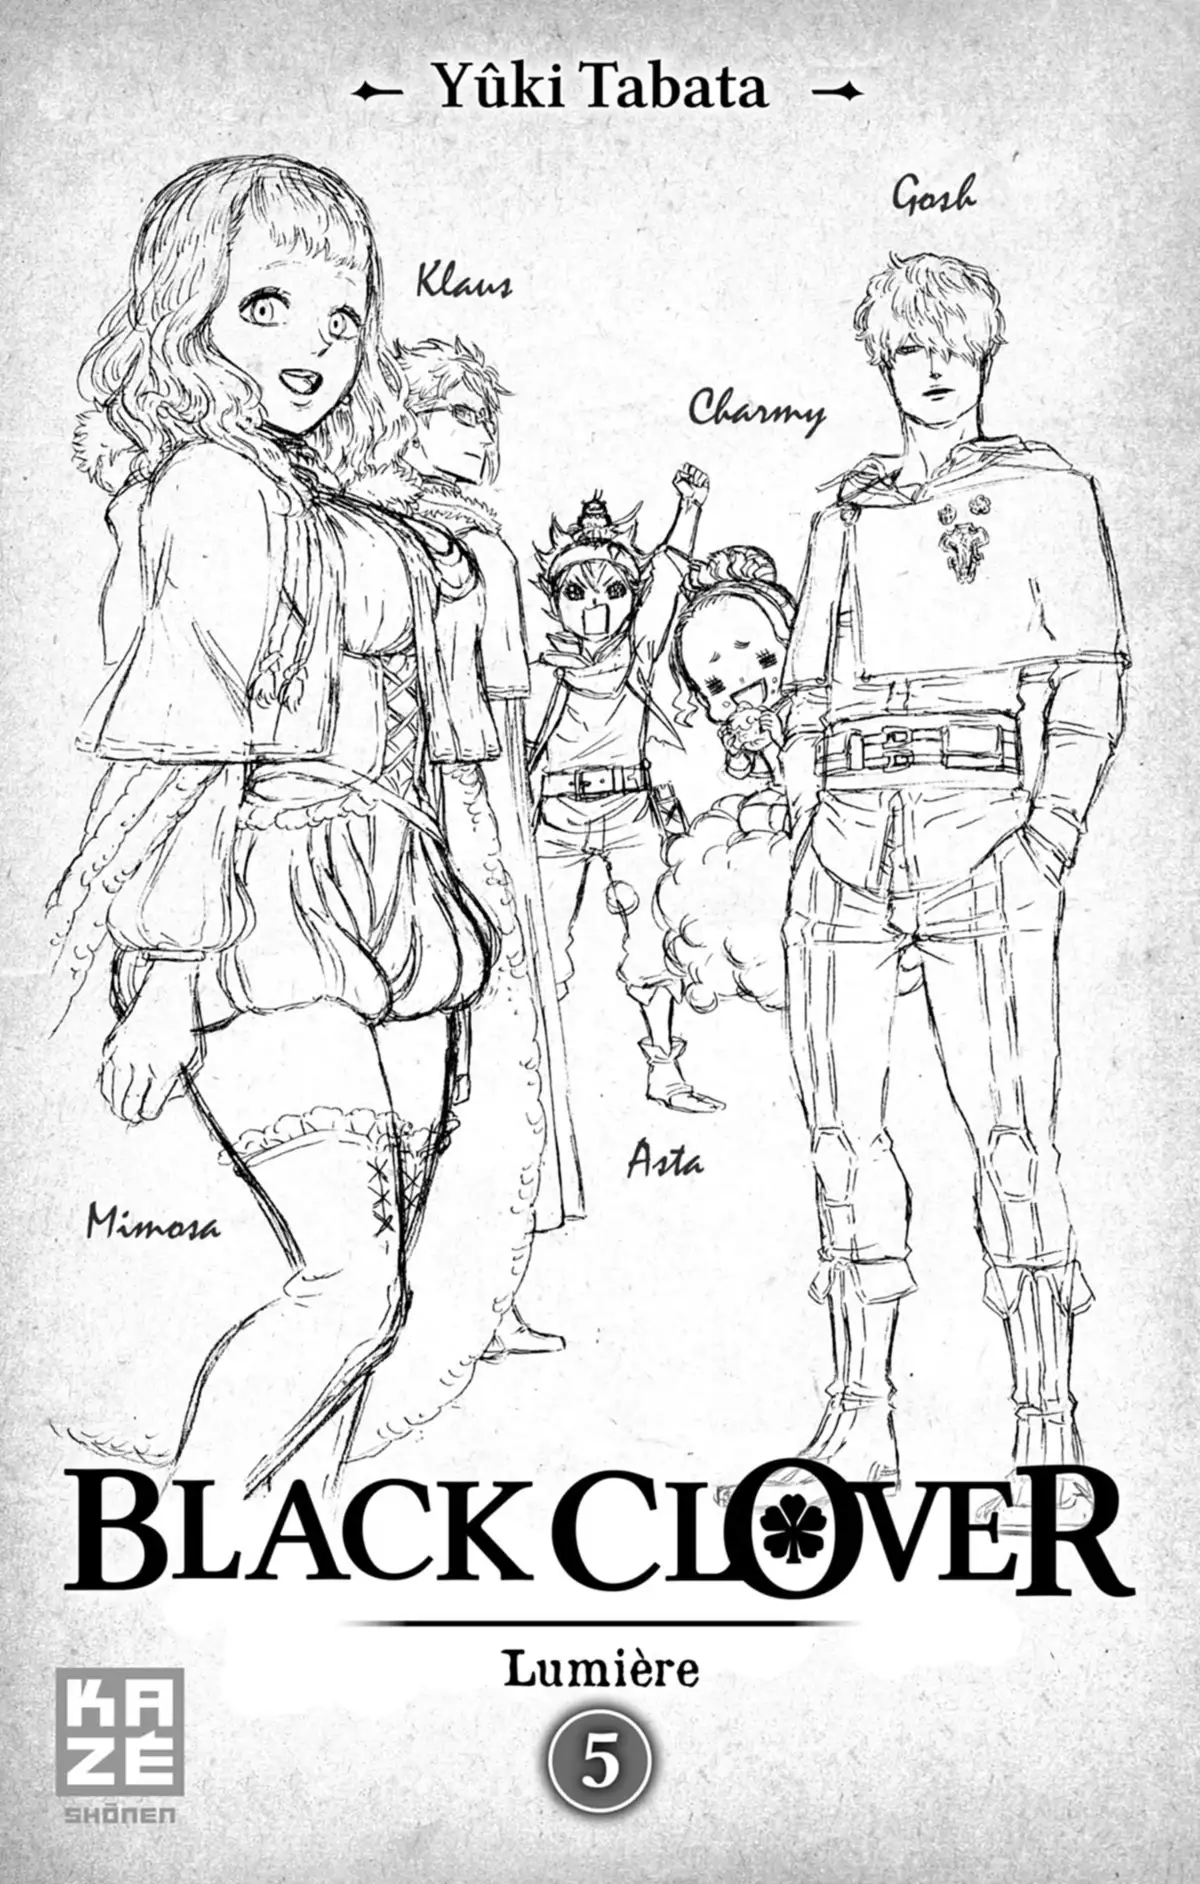 Black Clover Volume 5 page 2